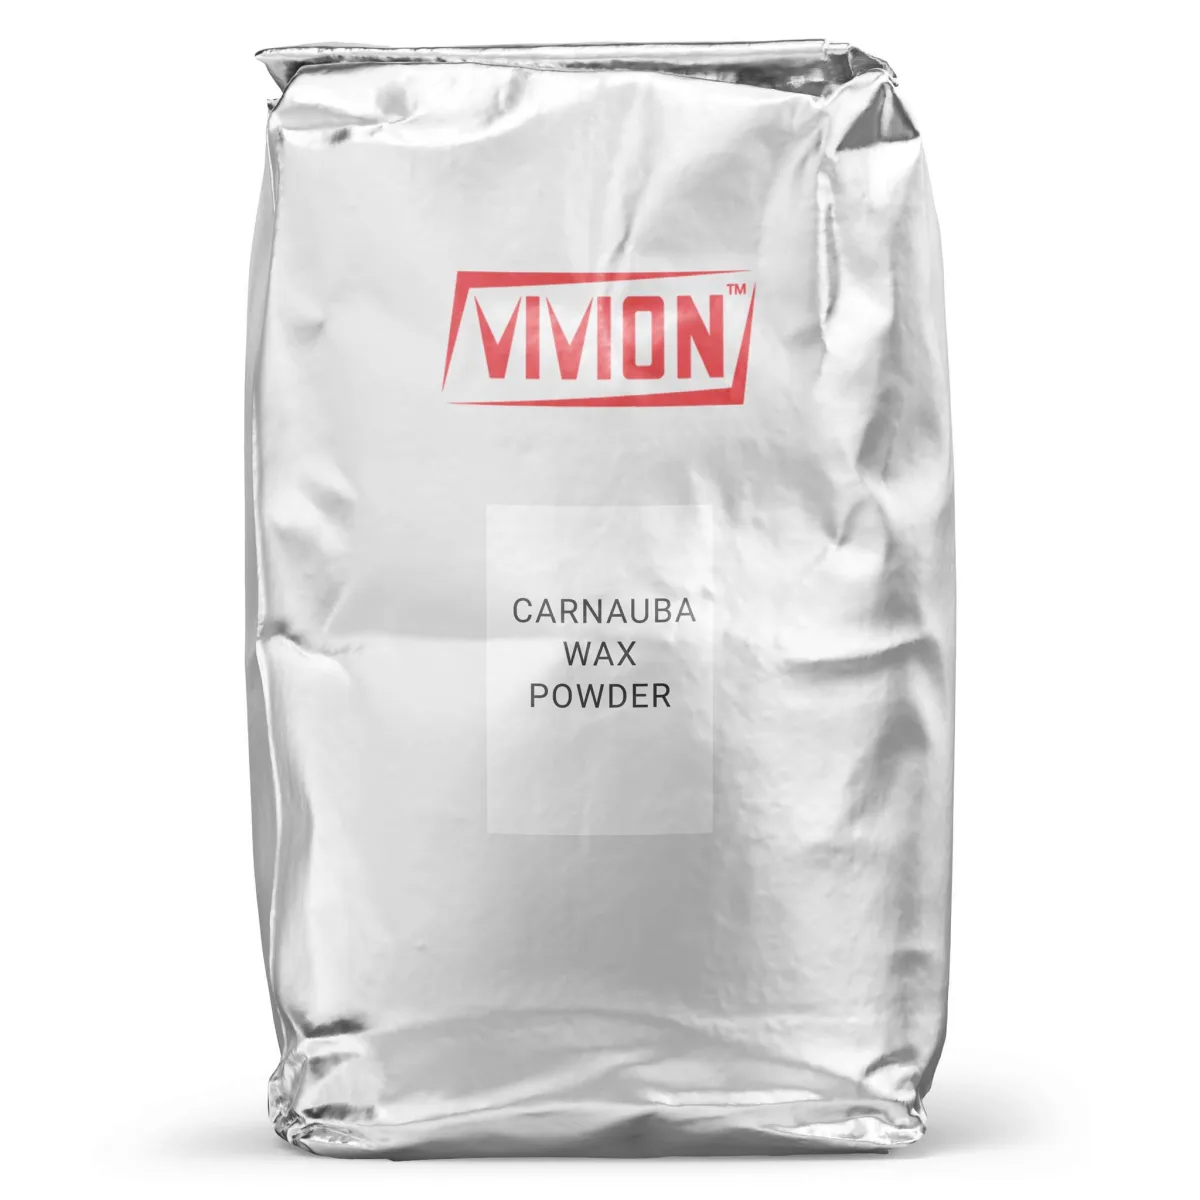 Bag of Vivion's wholesale Carnauba Wax.